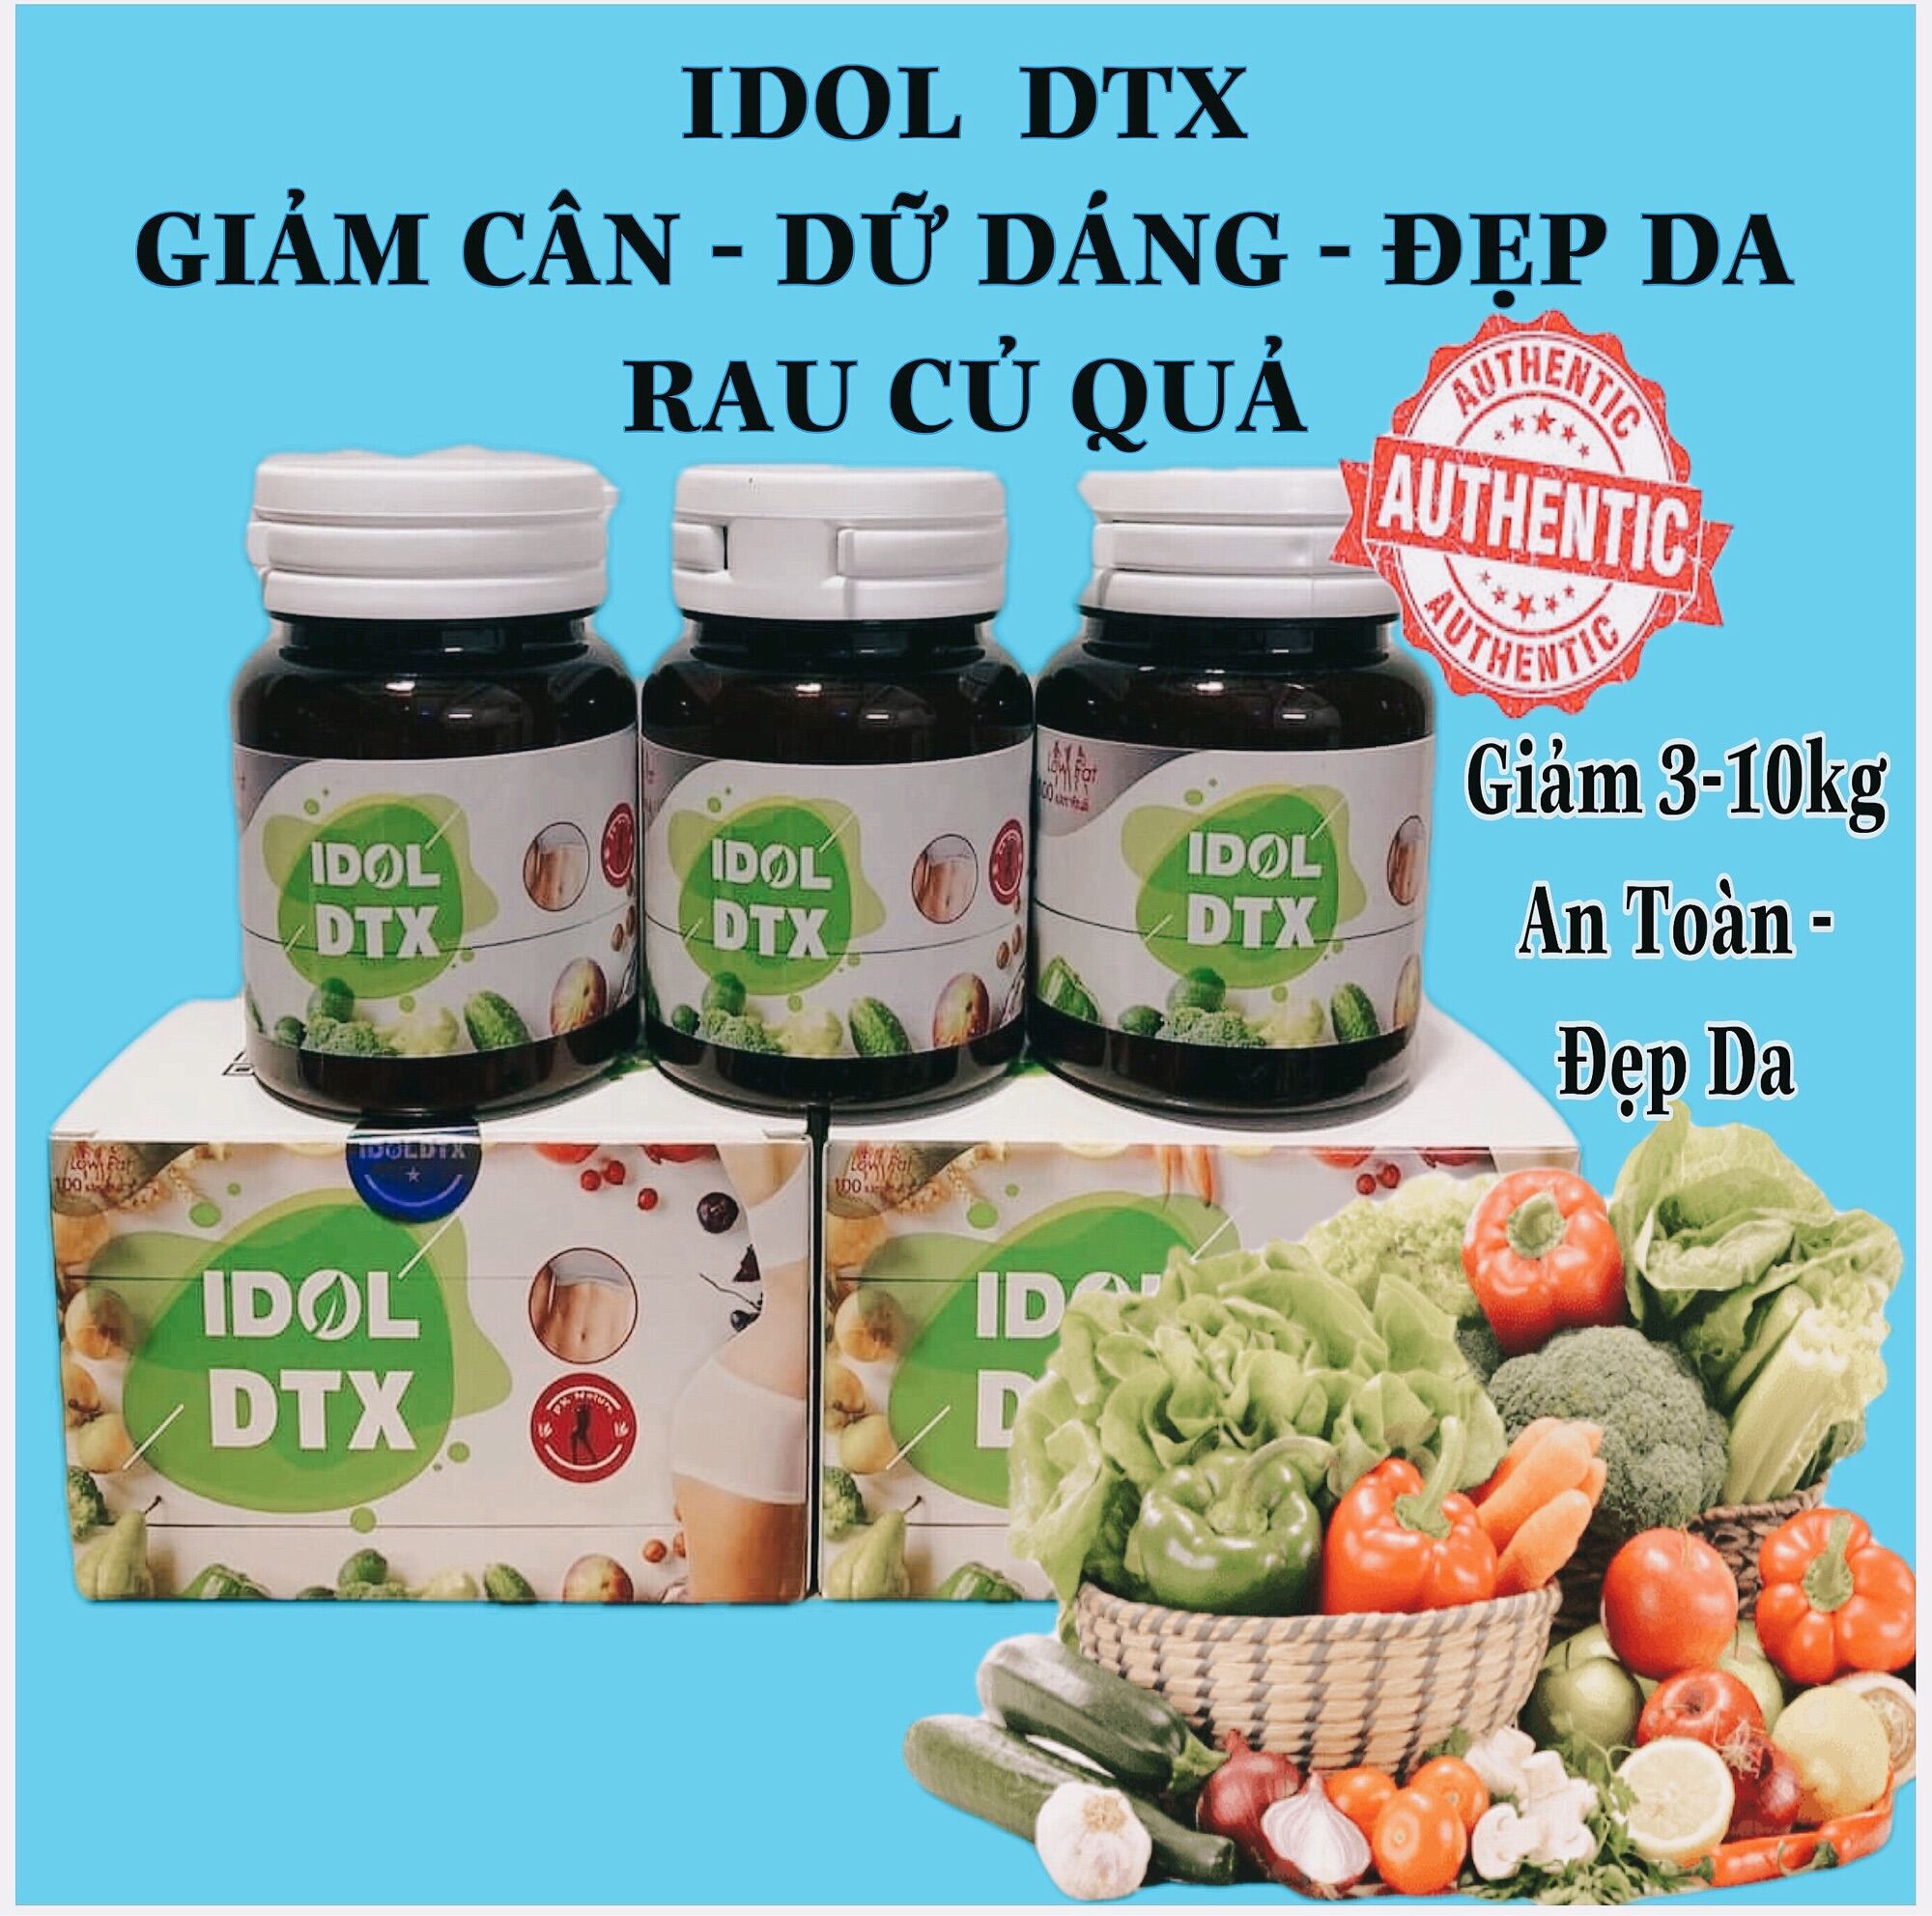 Giảm cân IDOL DTX hộp 60v rau củ quả [ Bao Giảm 3-10kg Đẹp Da ] giá rẻ